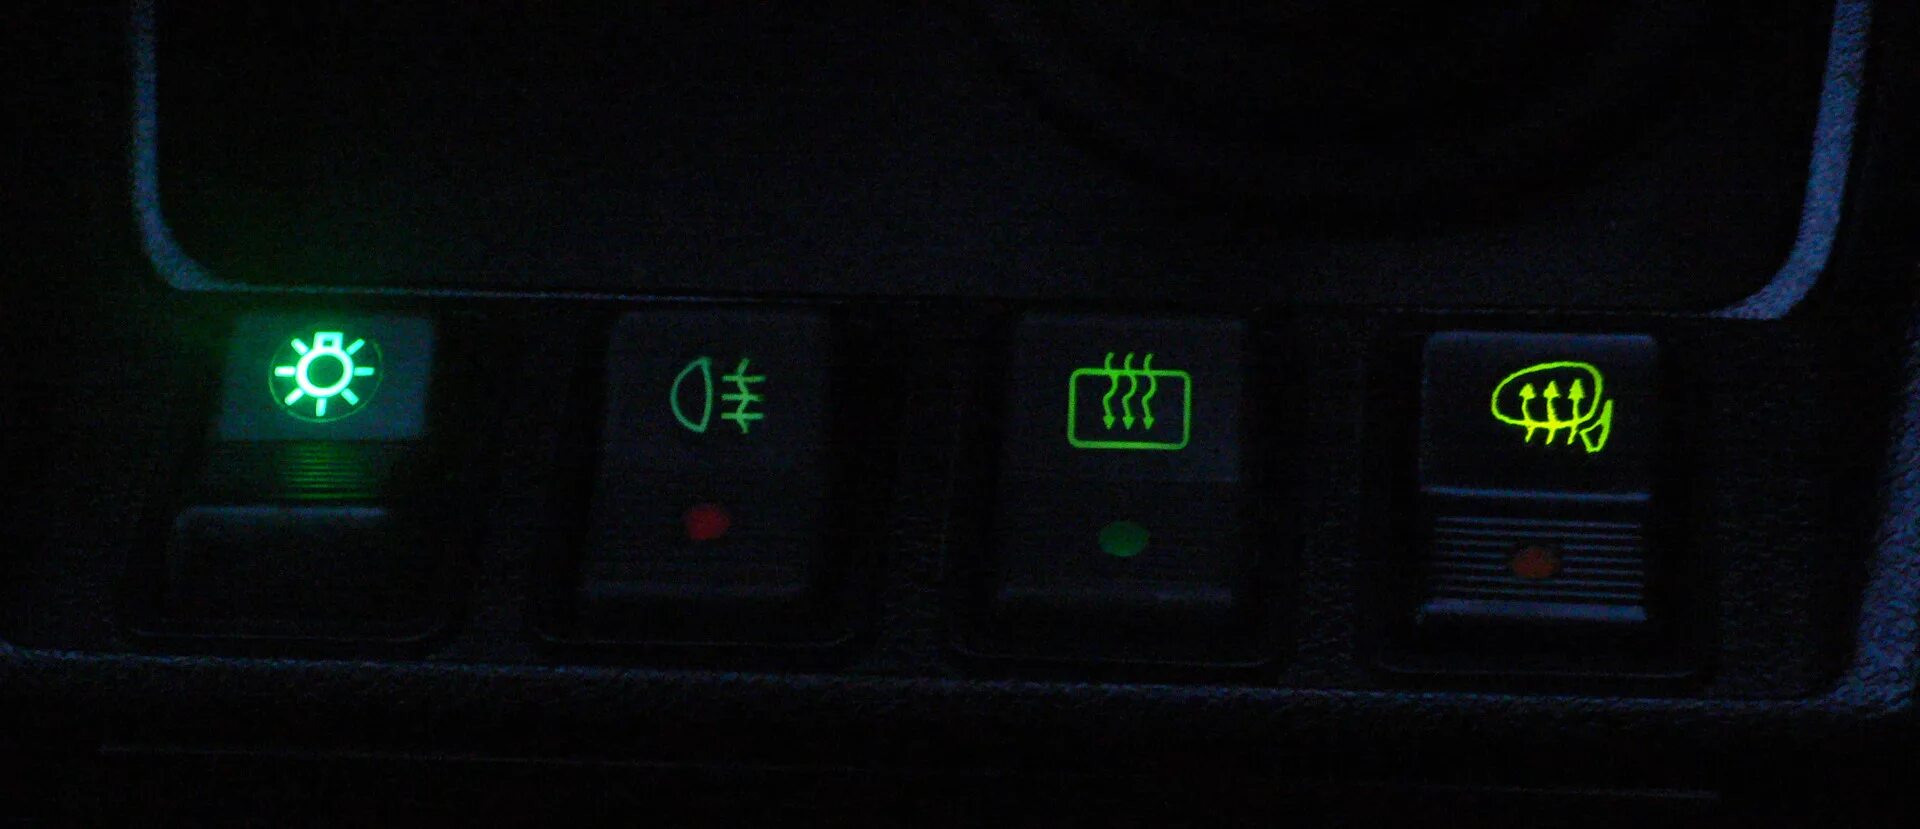 Подсветка кнопки габаритов. Пересвет кнопок 2107. Кнопка обогрева заднего стекла ВАЗ 2107 С подсветкой. Кнопка включения задних противотуманных фар ВАЗ 2107 С подсветкой. Кнопки включения с подсветкой на ВАЗ-2107.